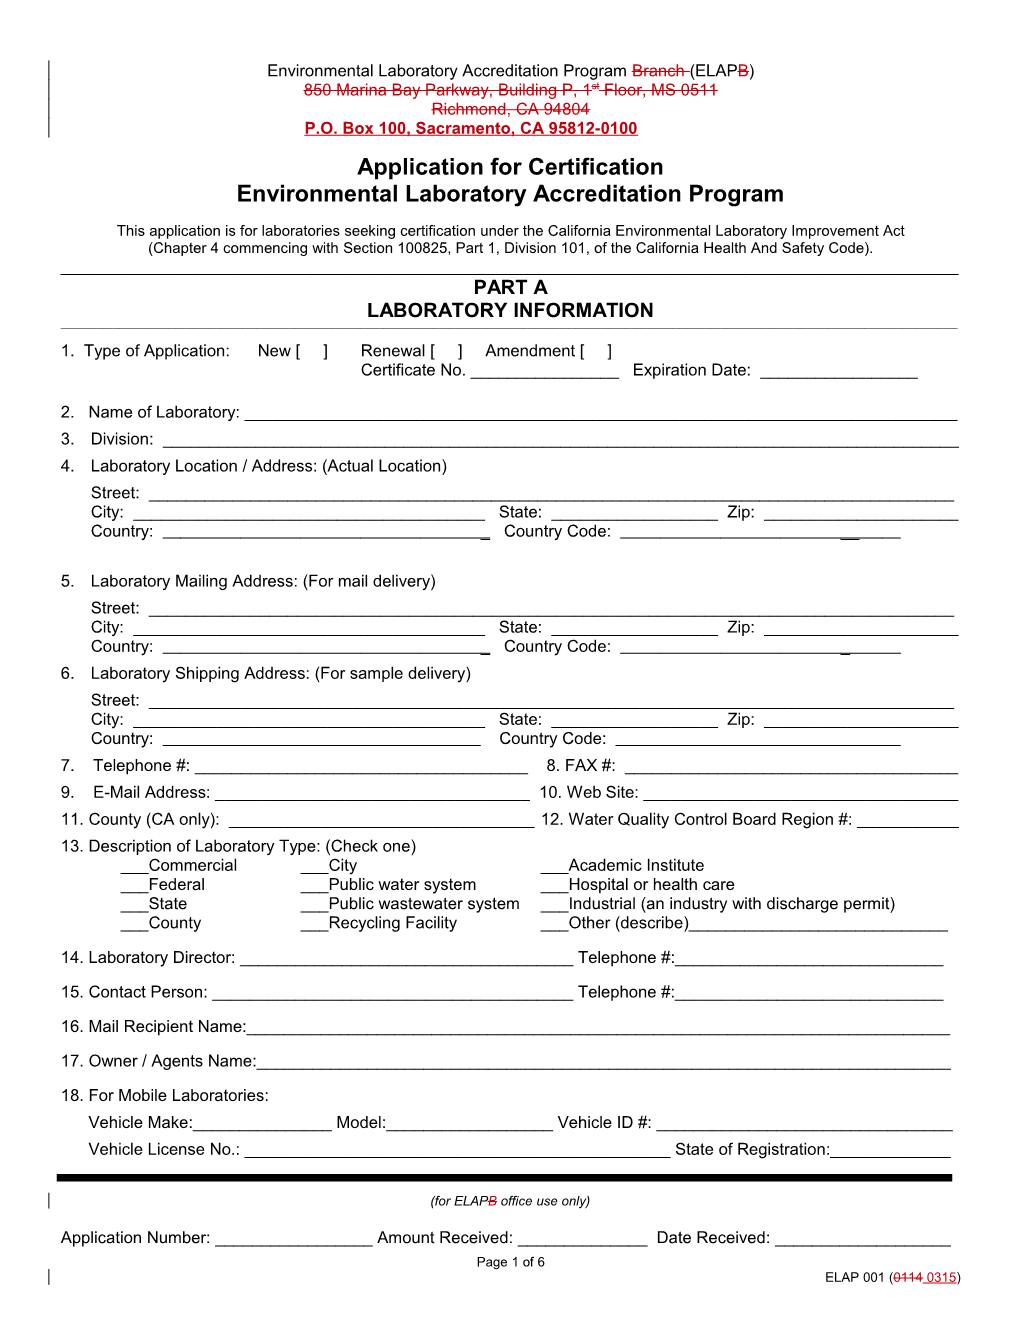 ELAP Application Form